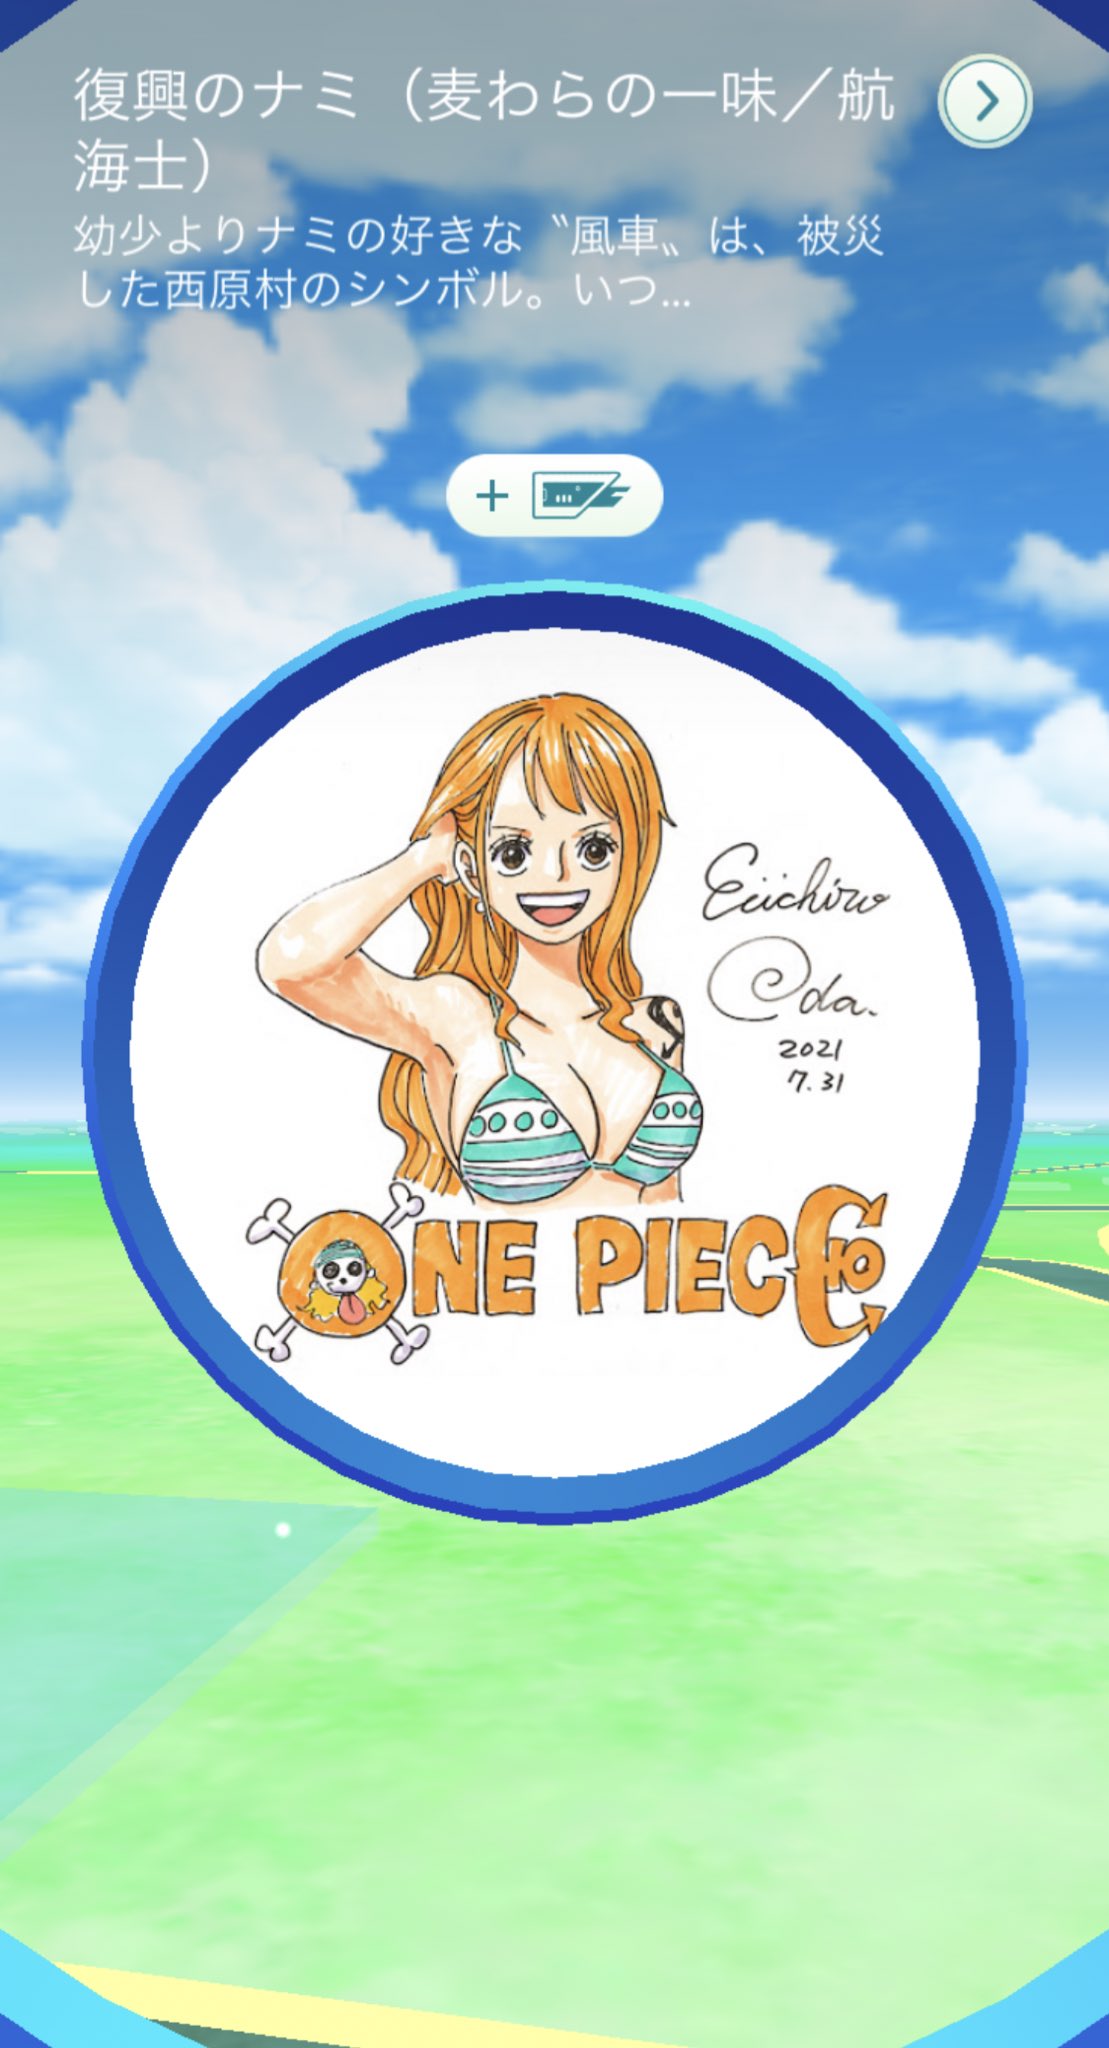 One Pieceスタッフ 公式 En Twitter ナミ像には ポケモンgo のポケストップが設置され 贈呈された色紙が掲示されています ナミ像 熊本復興 Onepiece Pokemongo